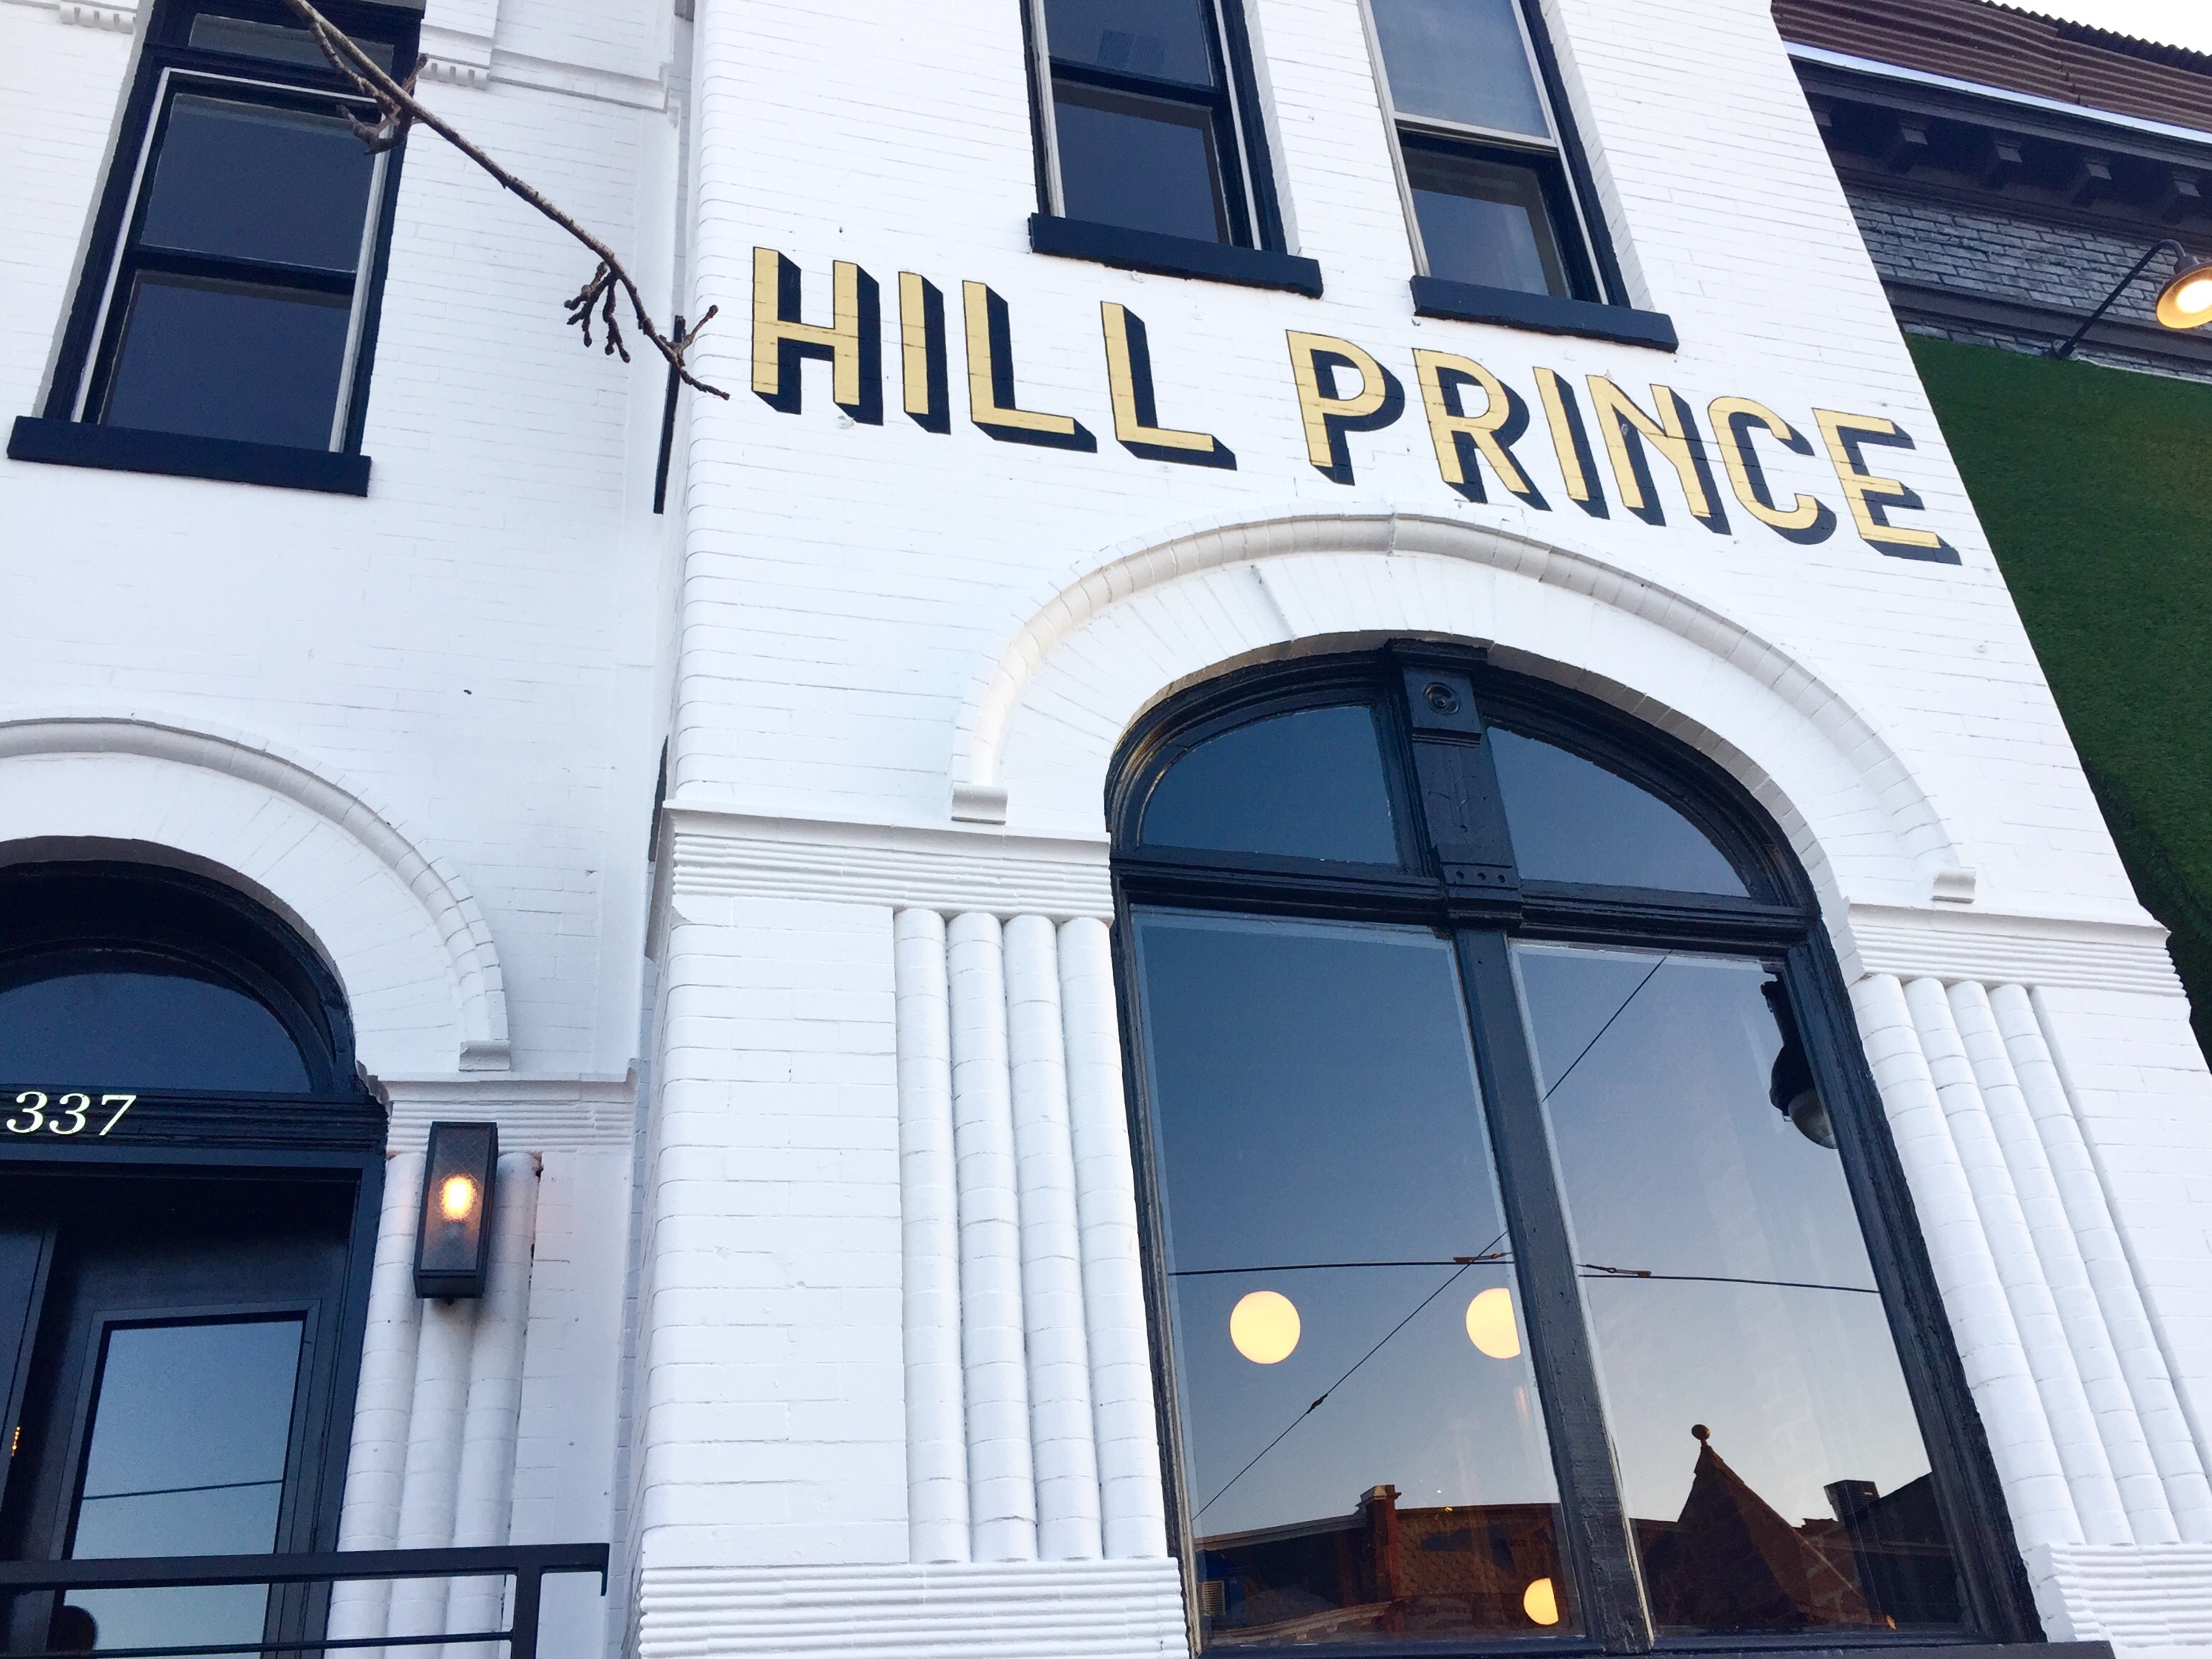 Hill Prince